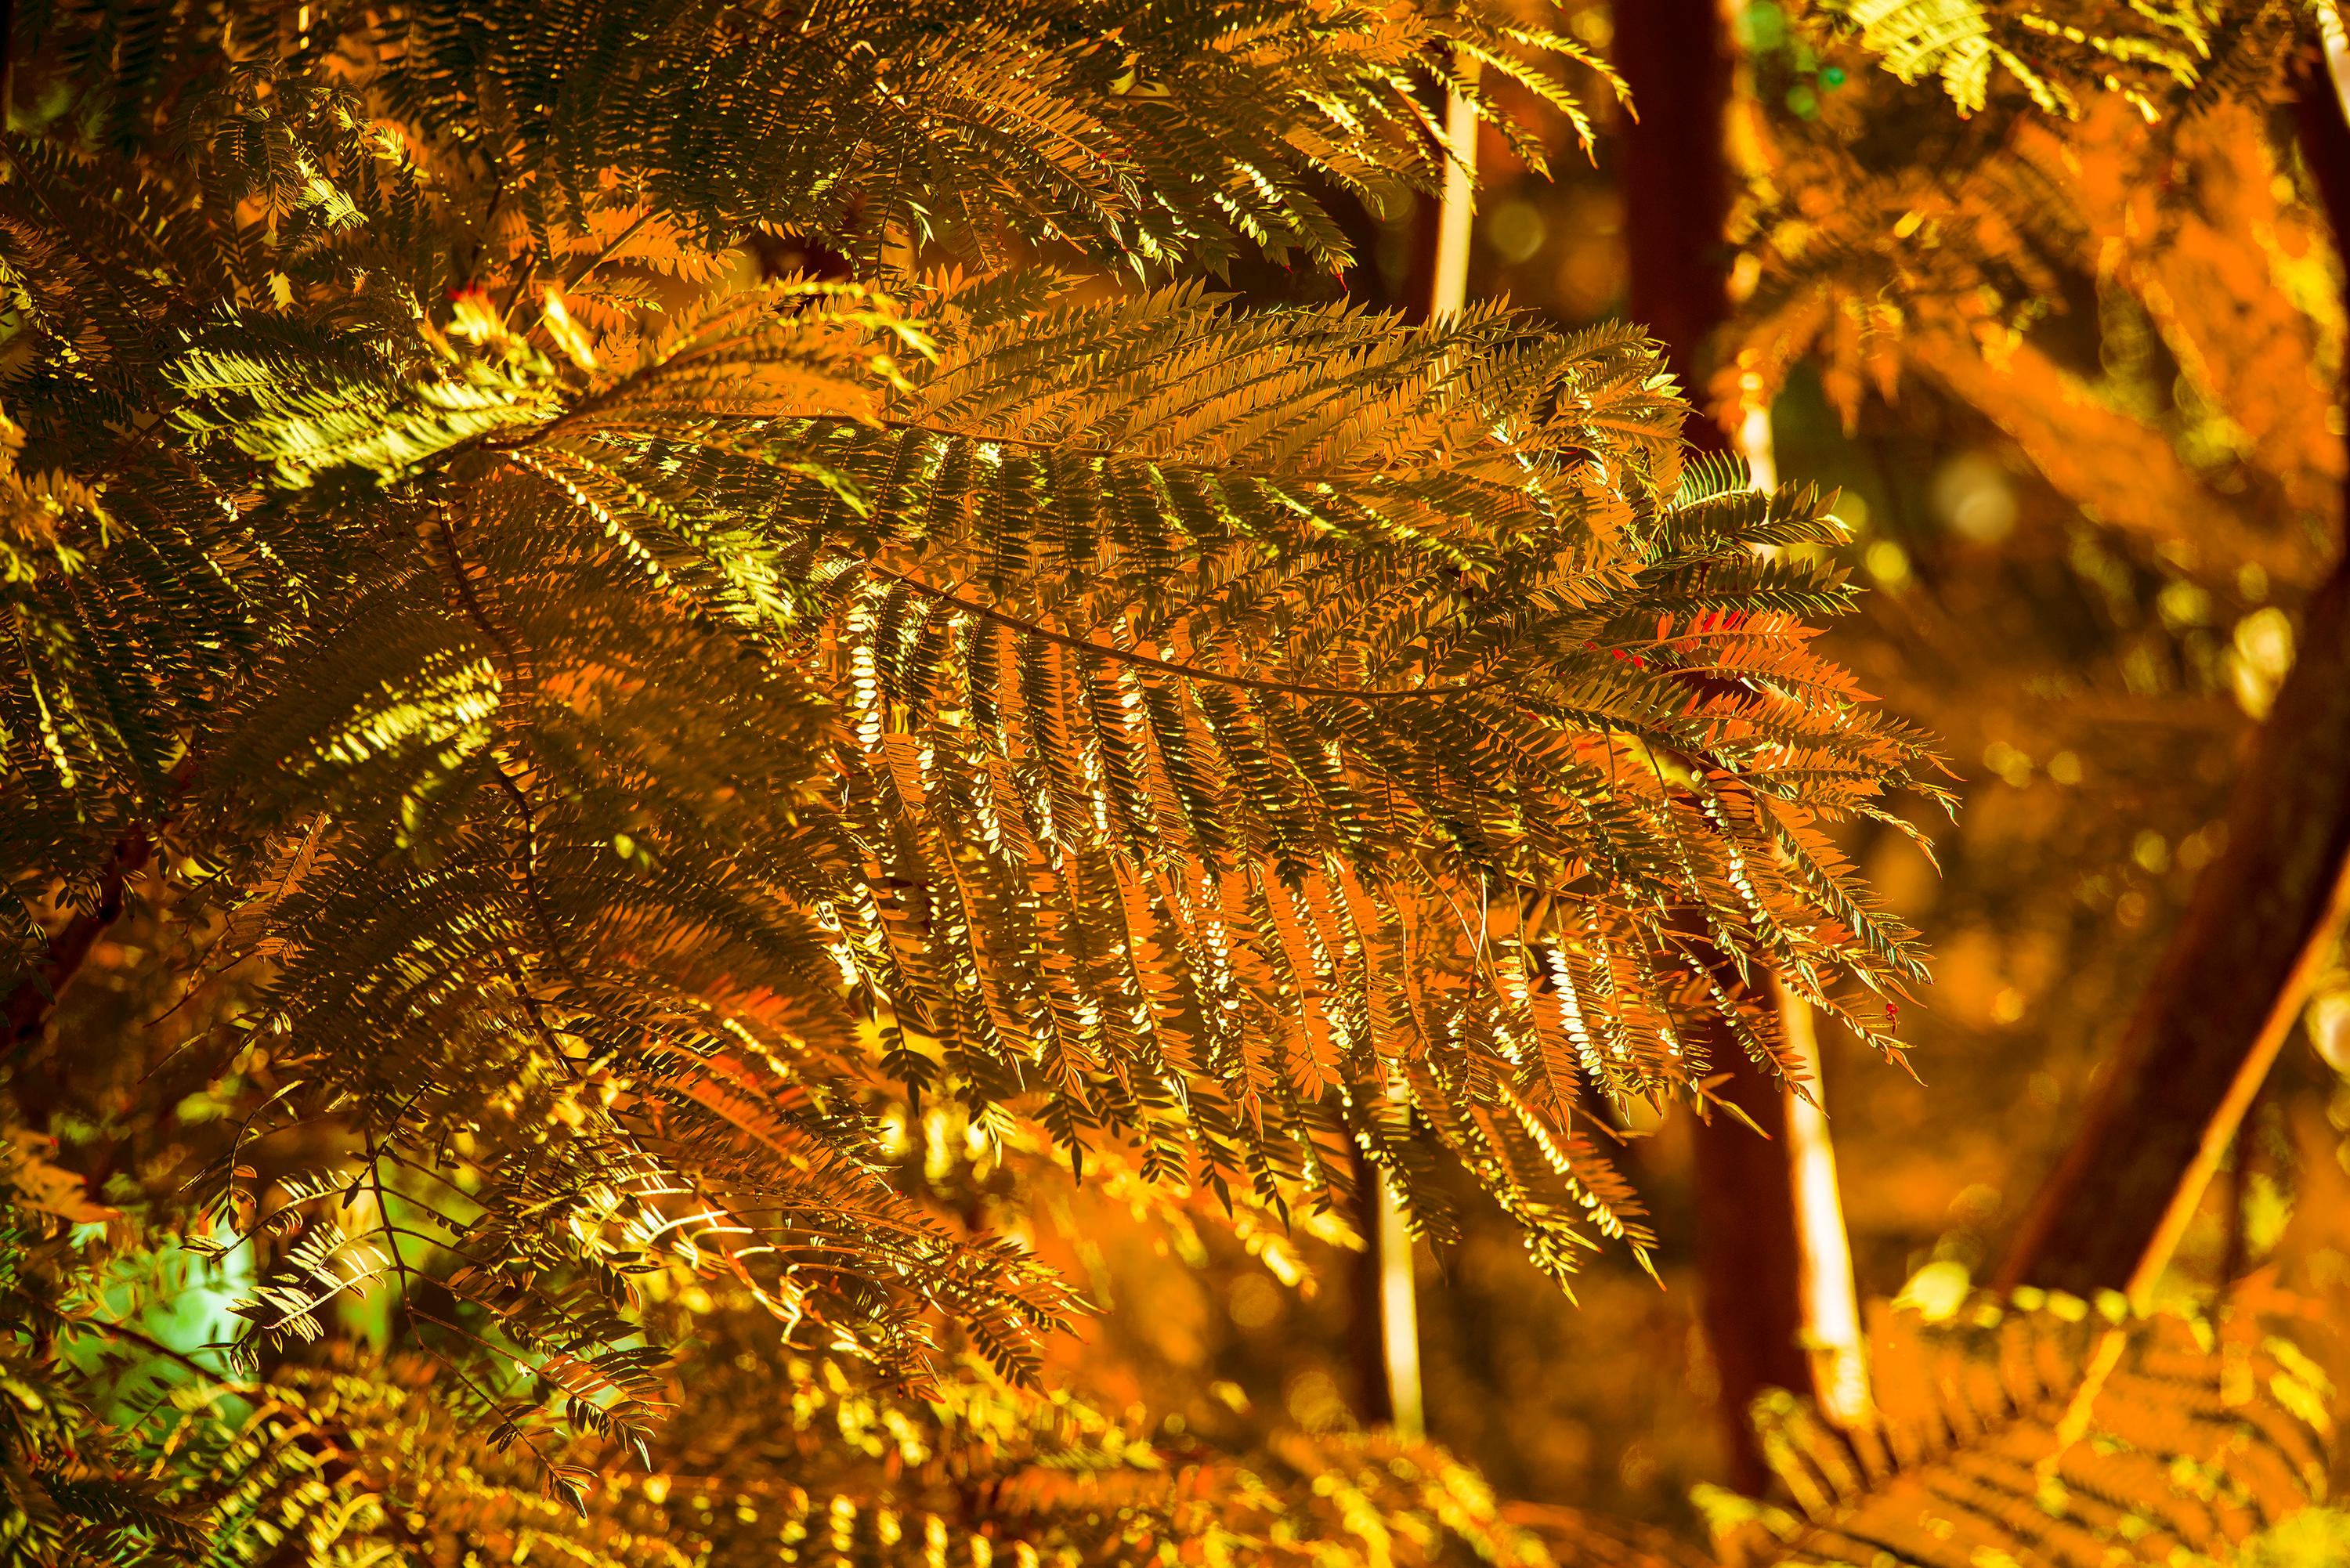 L'arbre doré, photographie de nature de Robert Funk